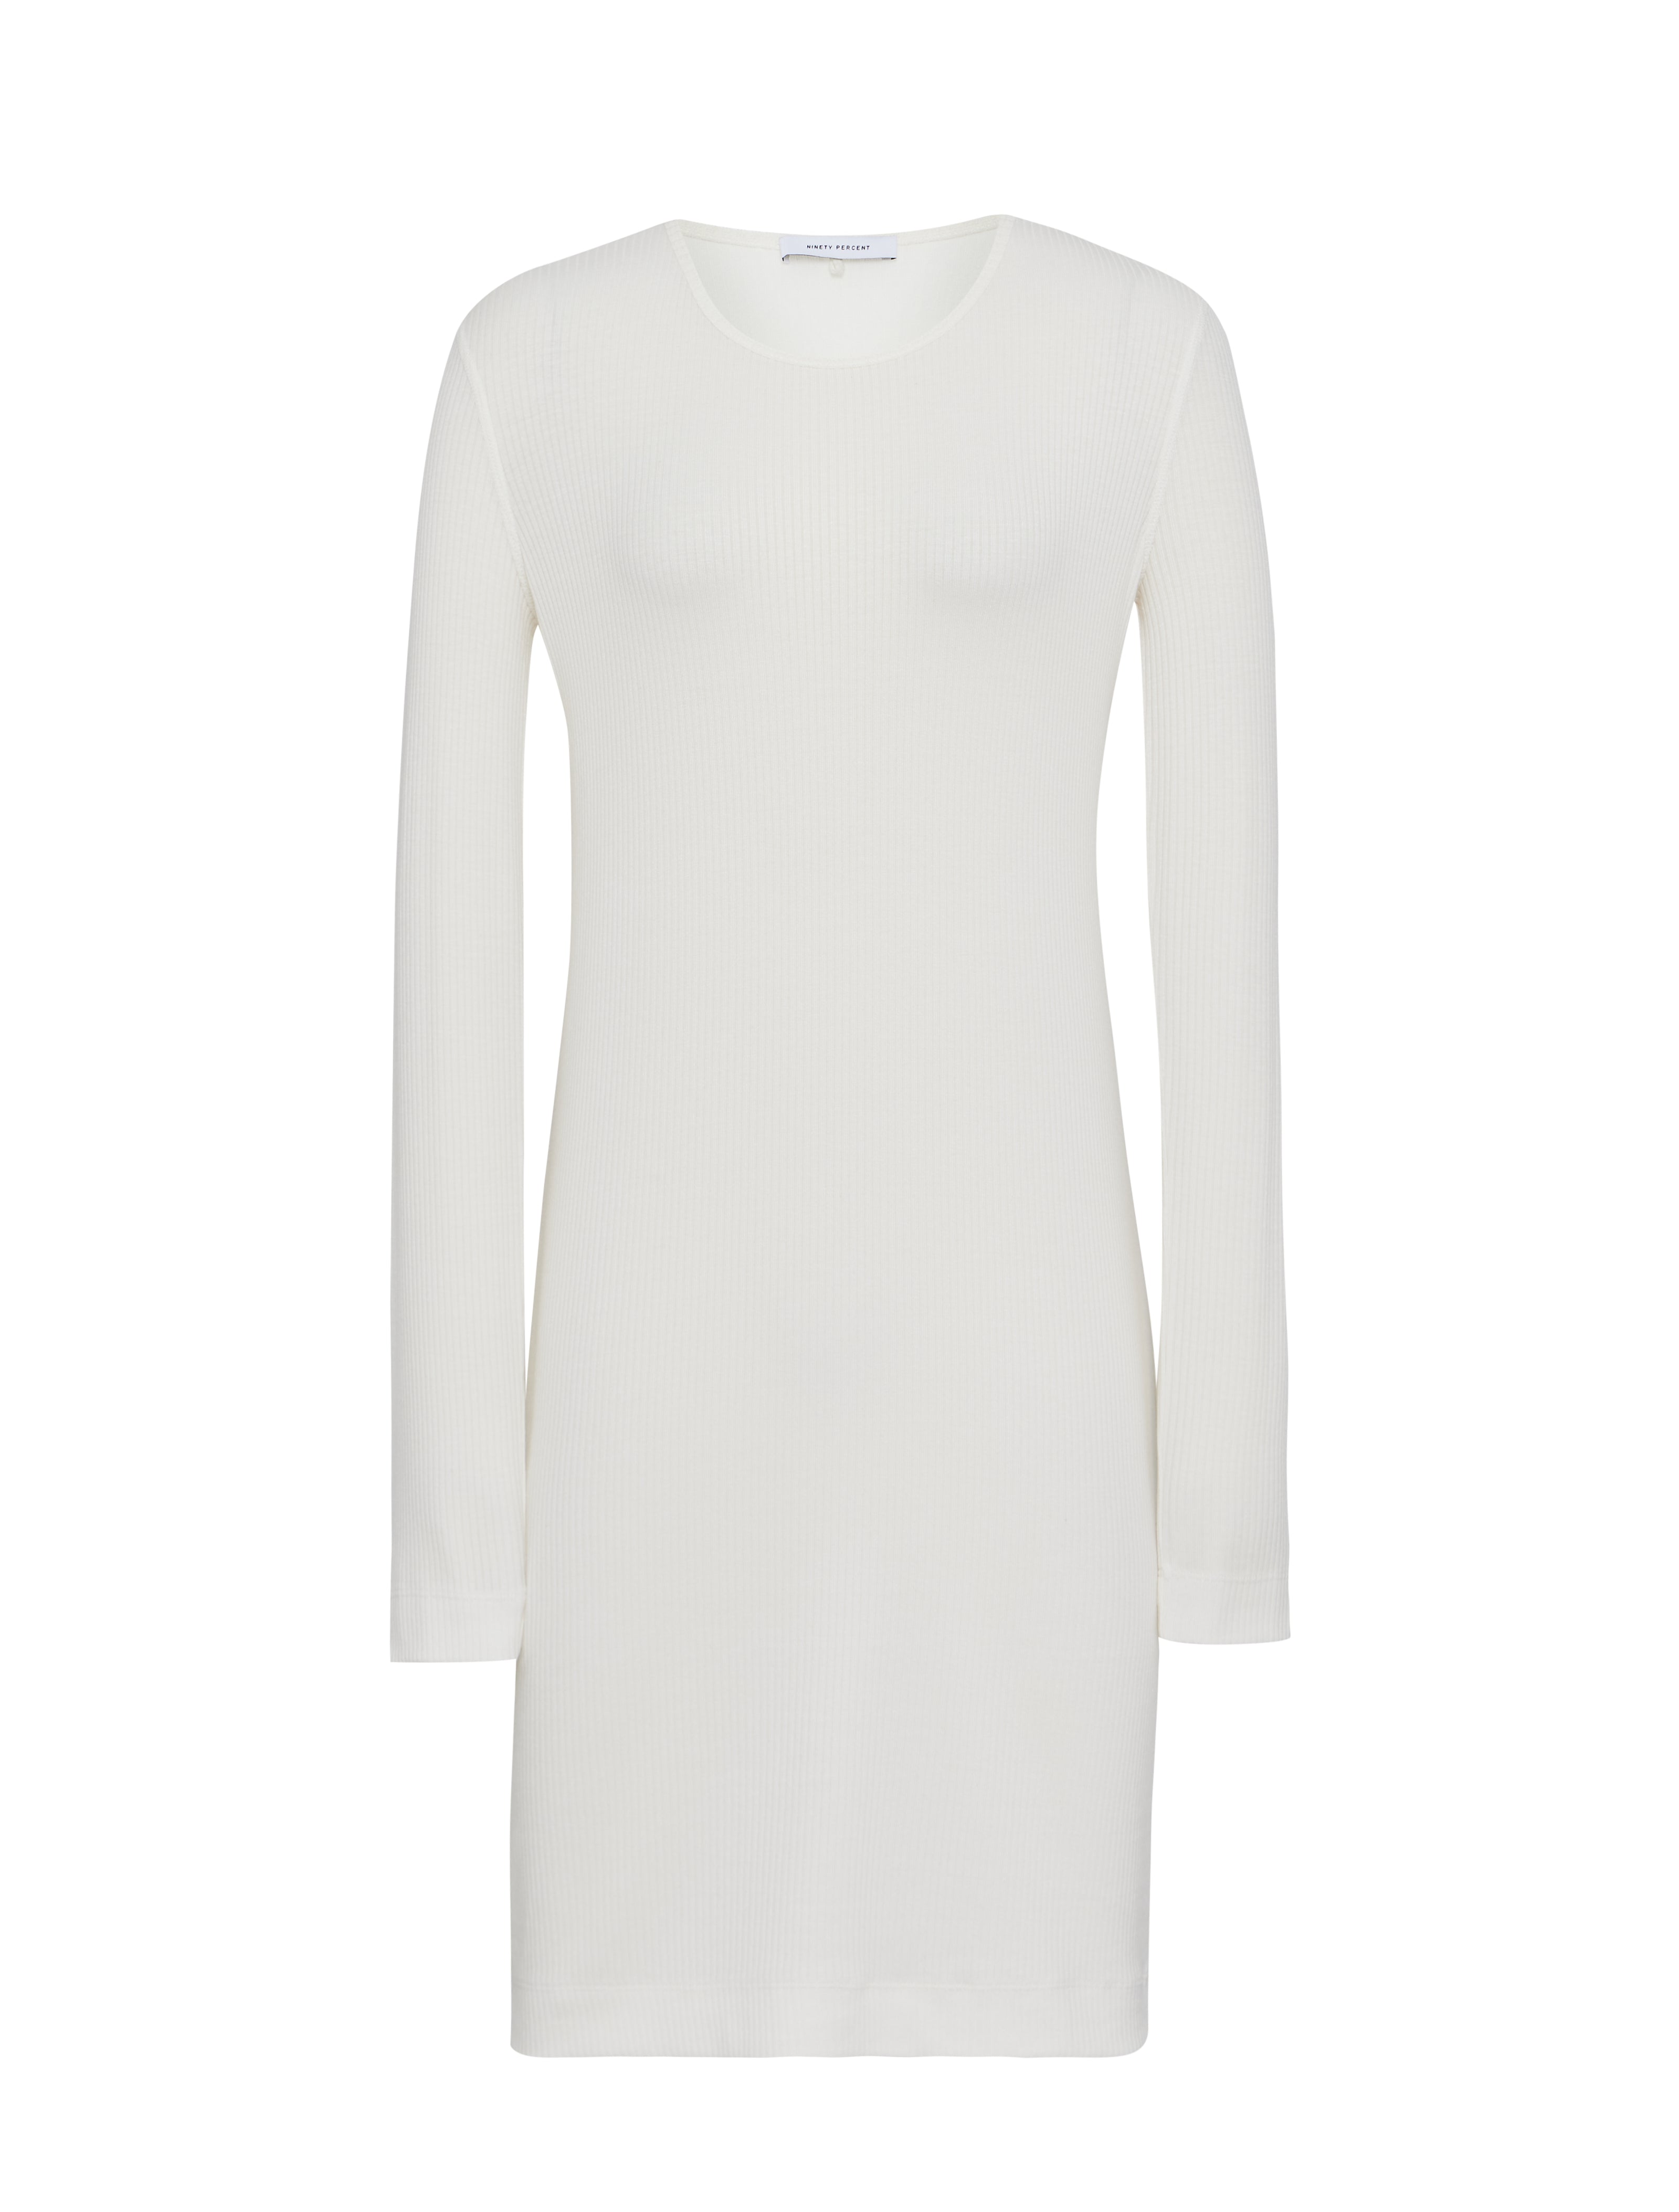 Ninety Percent Genesis Dress in Off White